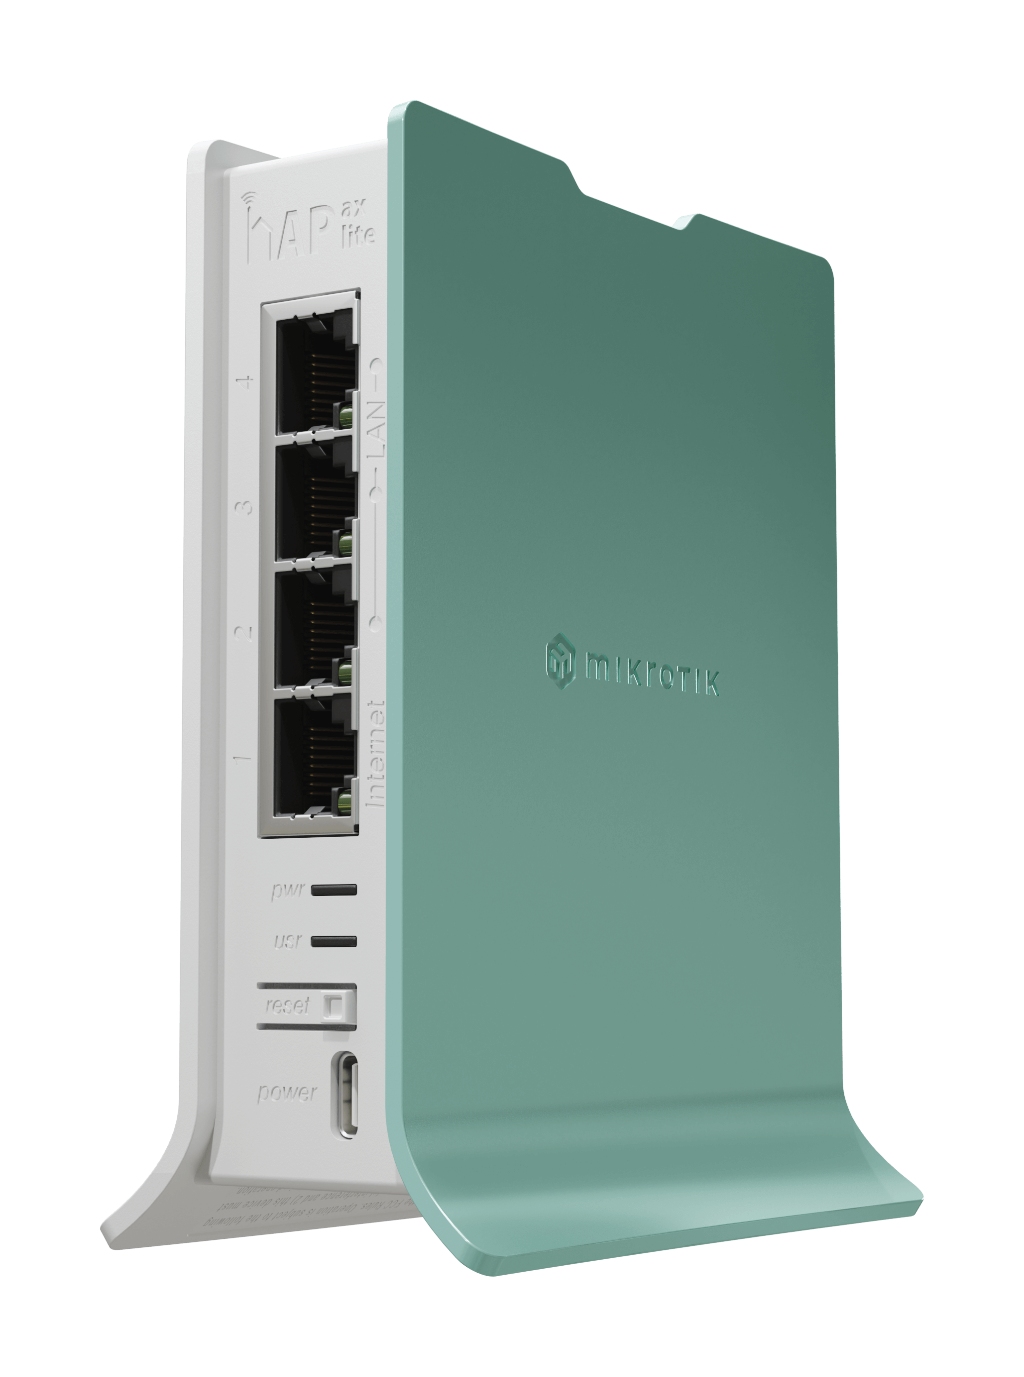 MikroTik hAP ax lite - L41G-2axD 2.4GHz WiFi6 AP Firewall Router ürün fiyat/ fiyatı, satış, Hemen Al, Sepete Ekle